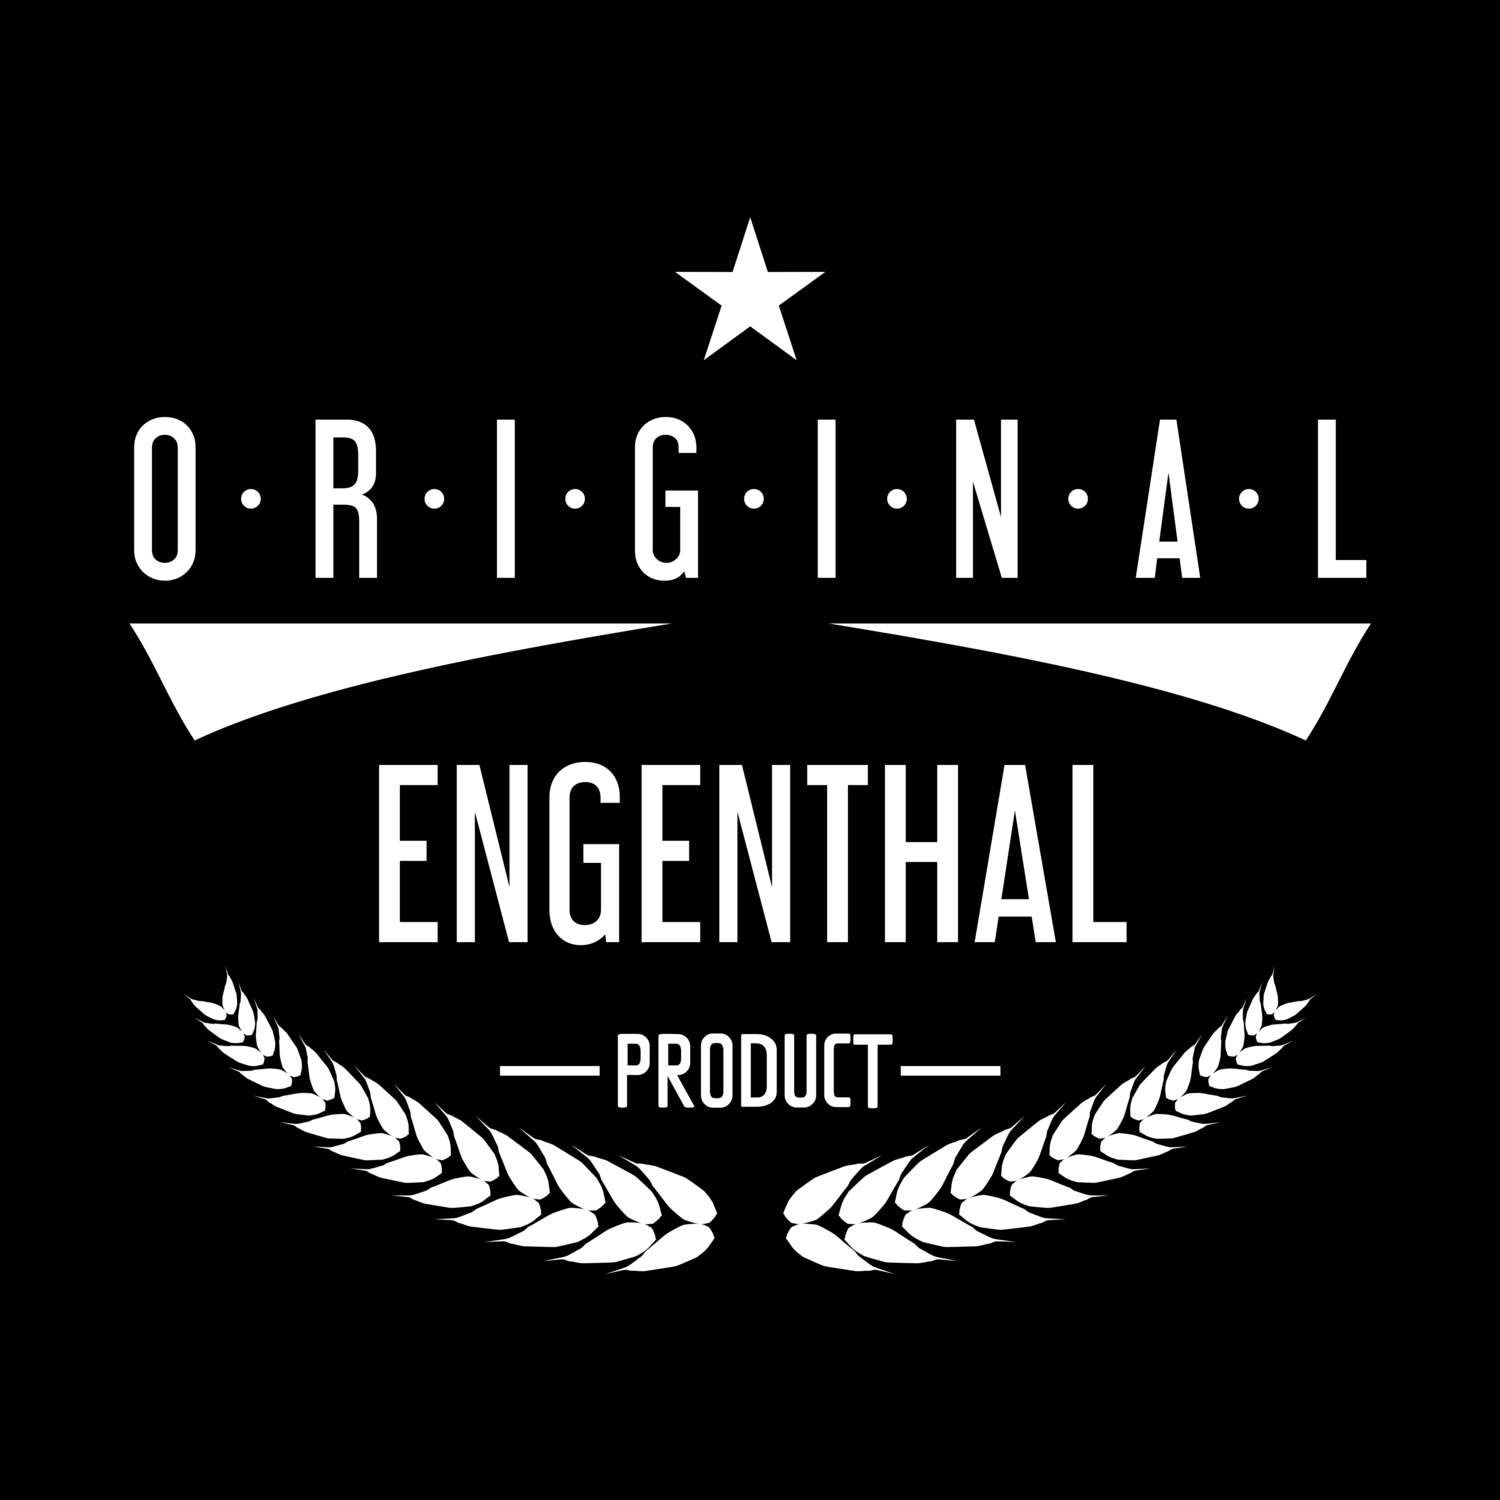 Engenthal T-Shirt »Original Product«